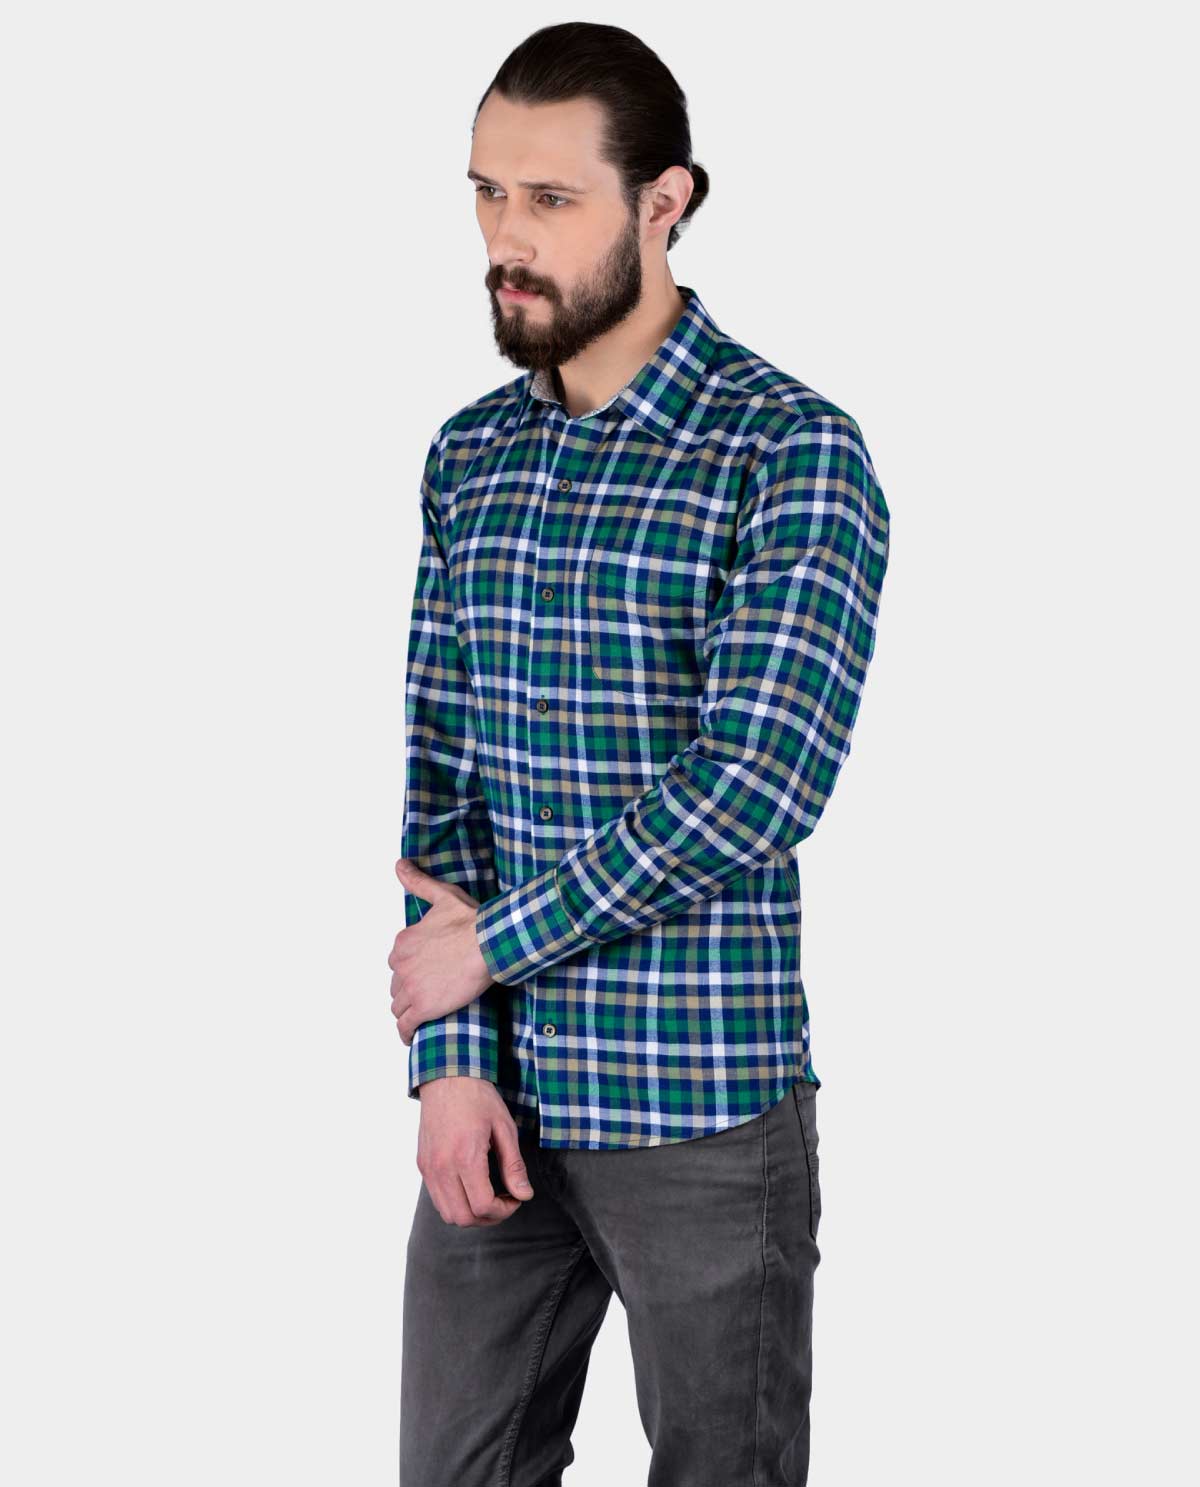 Green-and-Blue-Check-Shirt-for-Men3 - Kashvi Designs